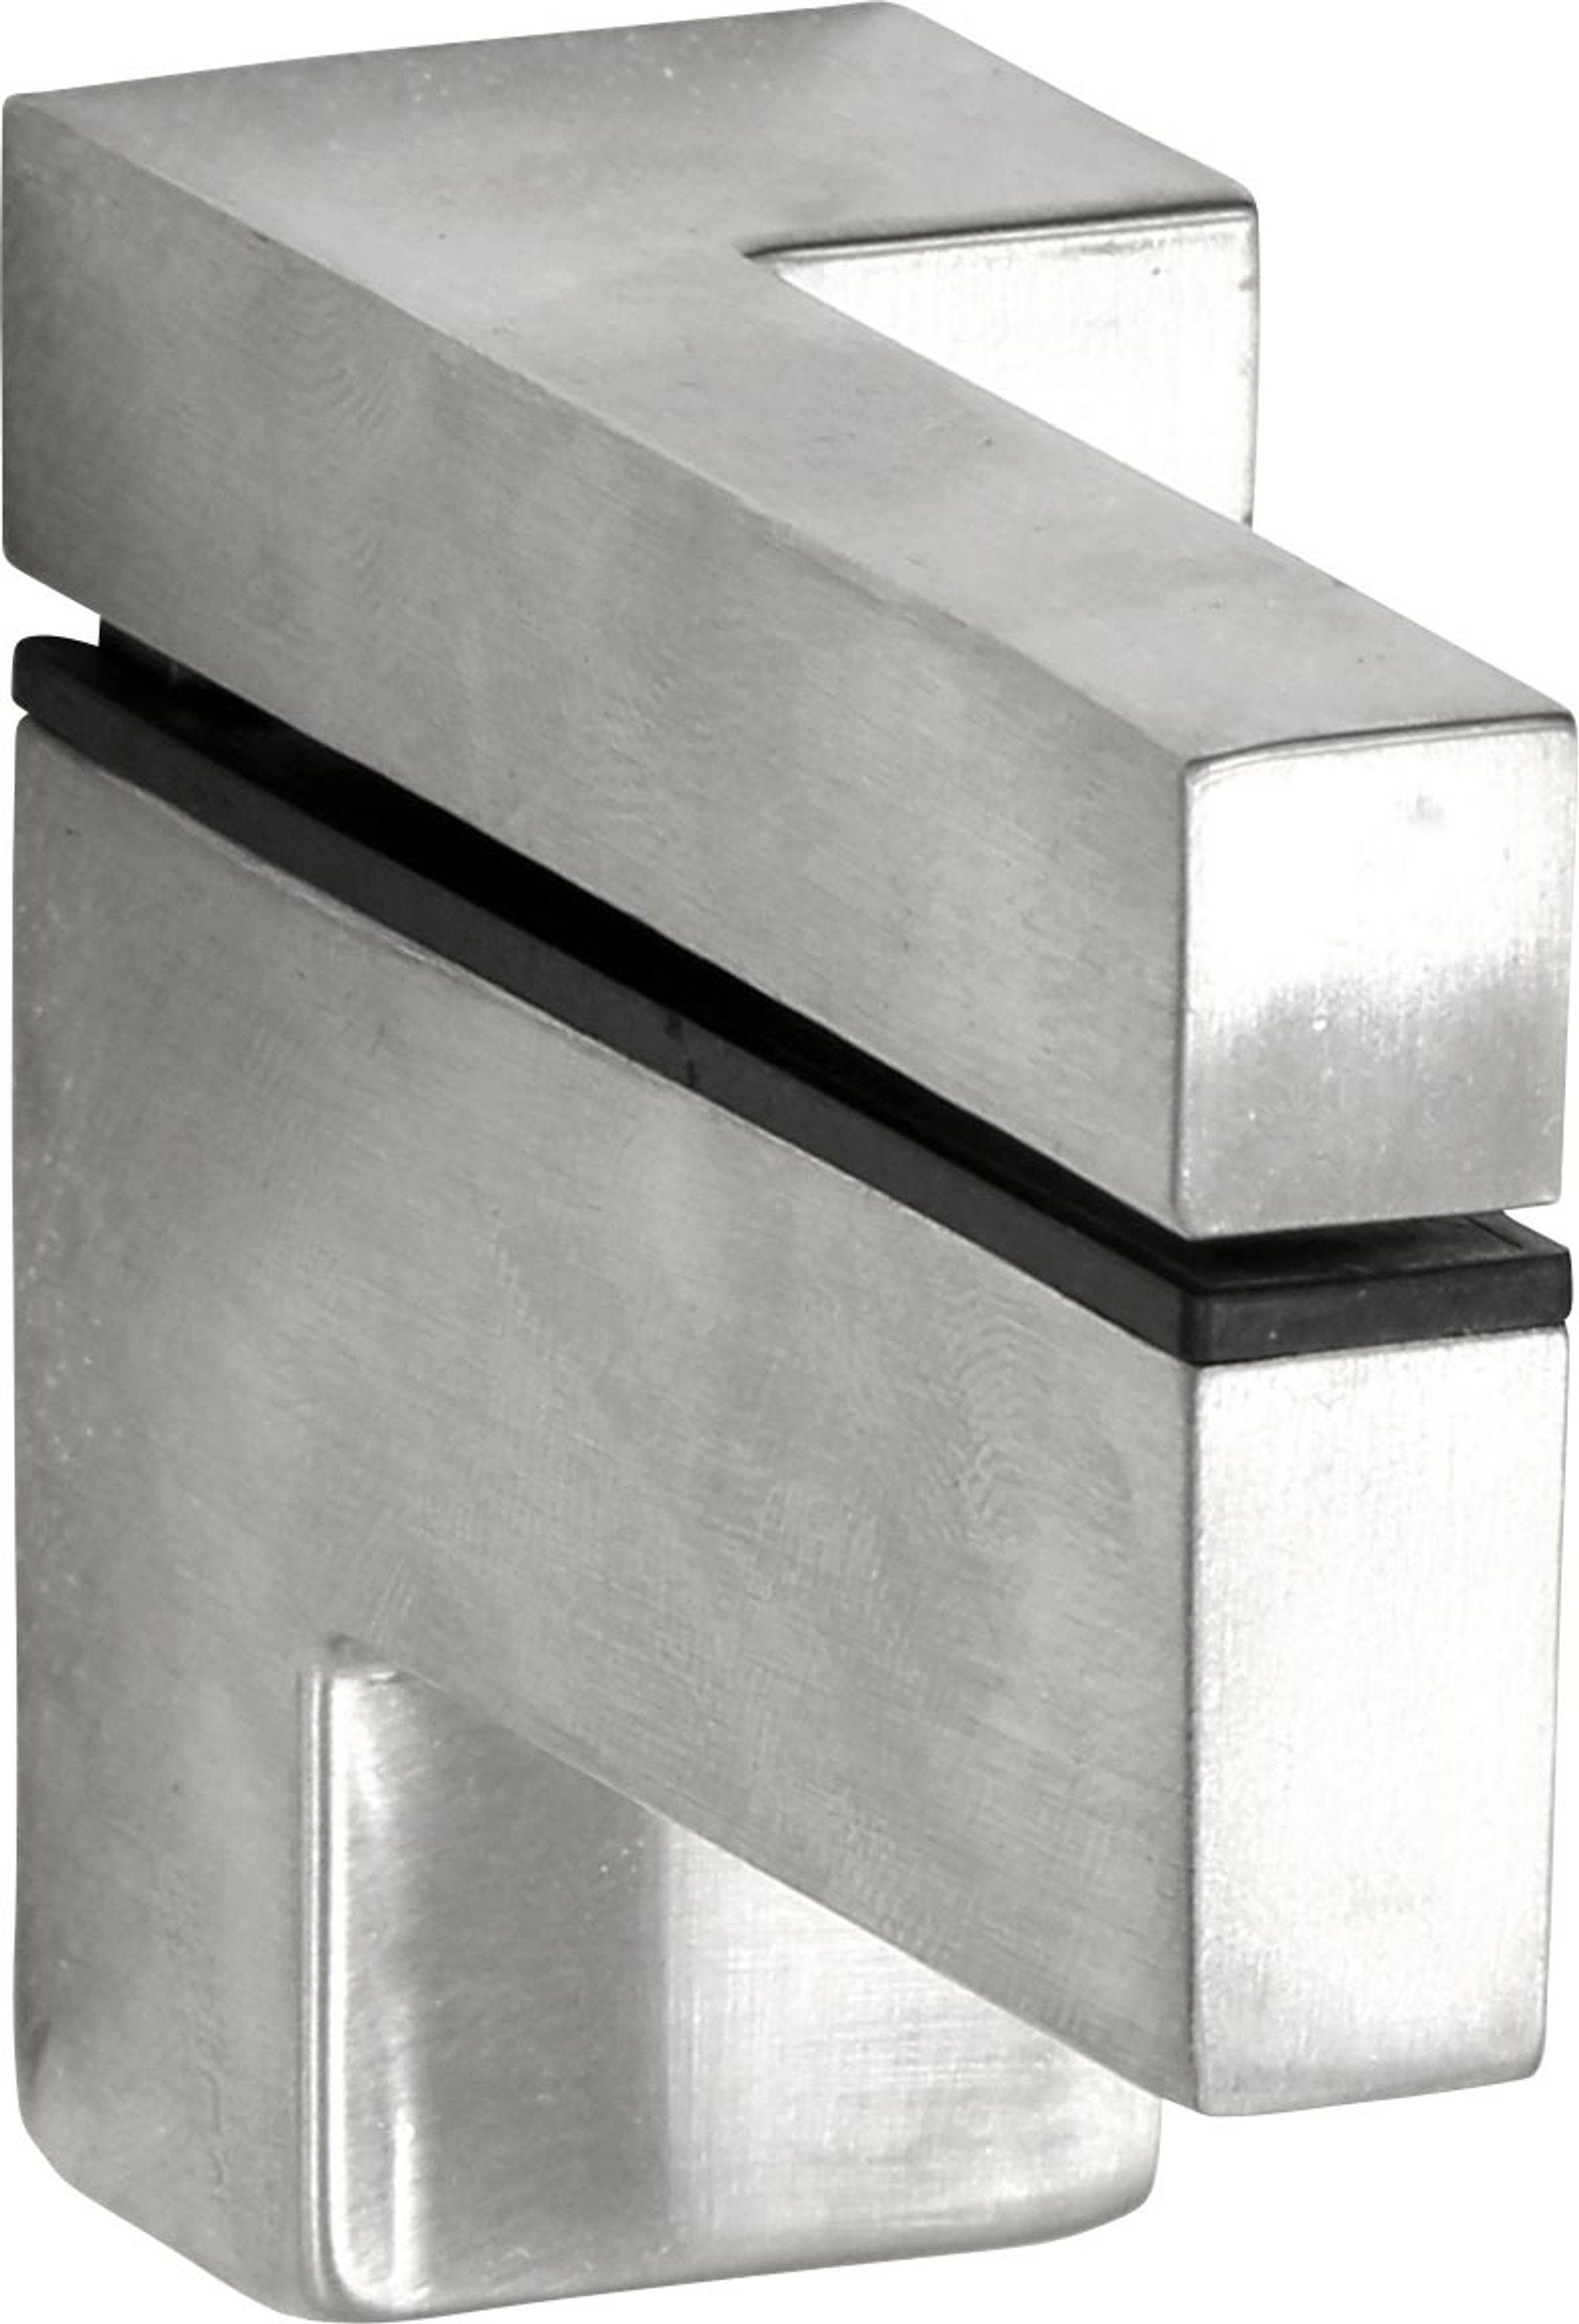 Wandregal ESG-Sicherheitsglas + Glasboden klar ib aus x cm Wandregal Clip PIAZZA, 6mm Glasregal 40 - 15 style